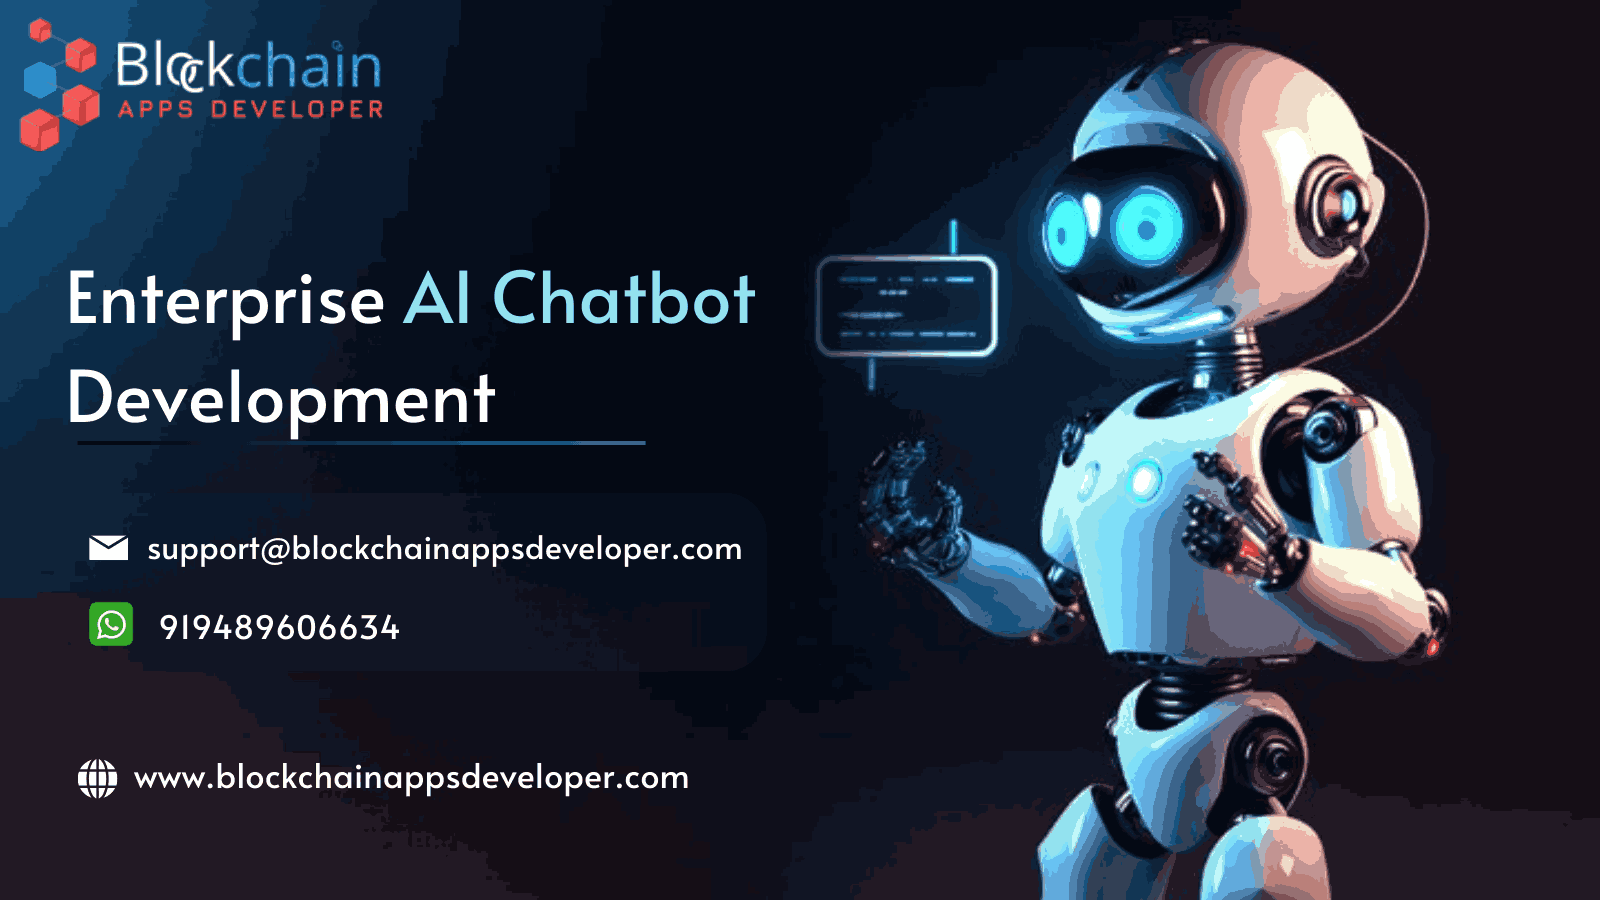 Enterprise AI Chatbot Development Company